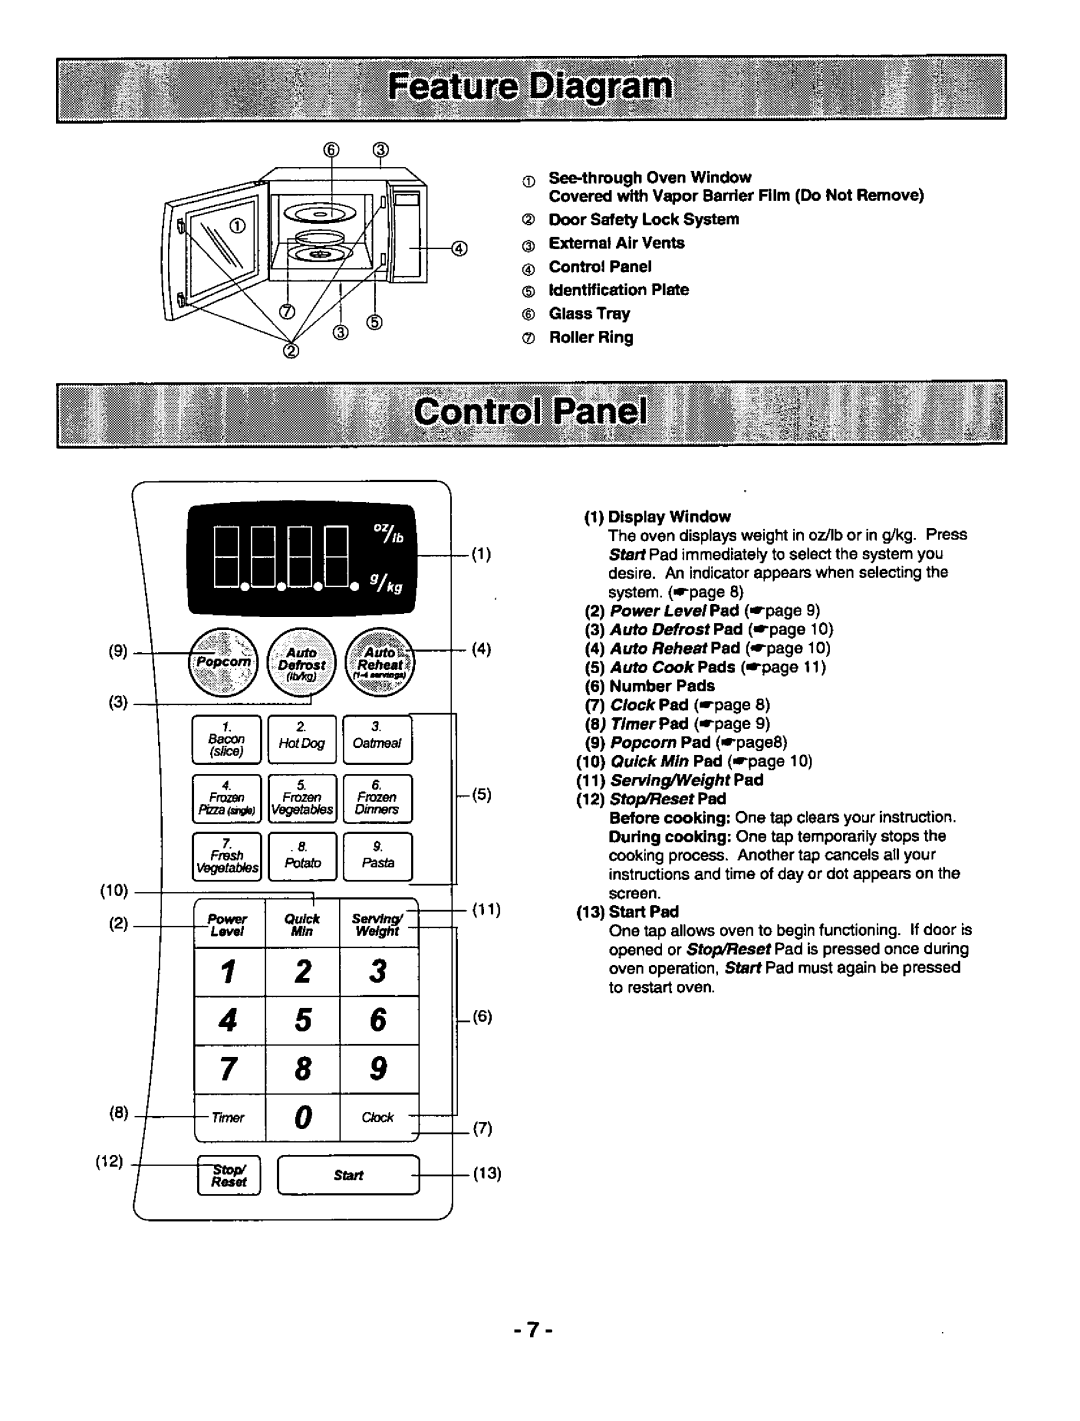 Panasonic NN-S558, NN-S658 manual 